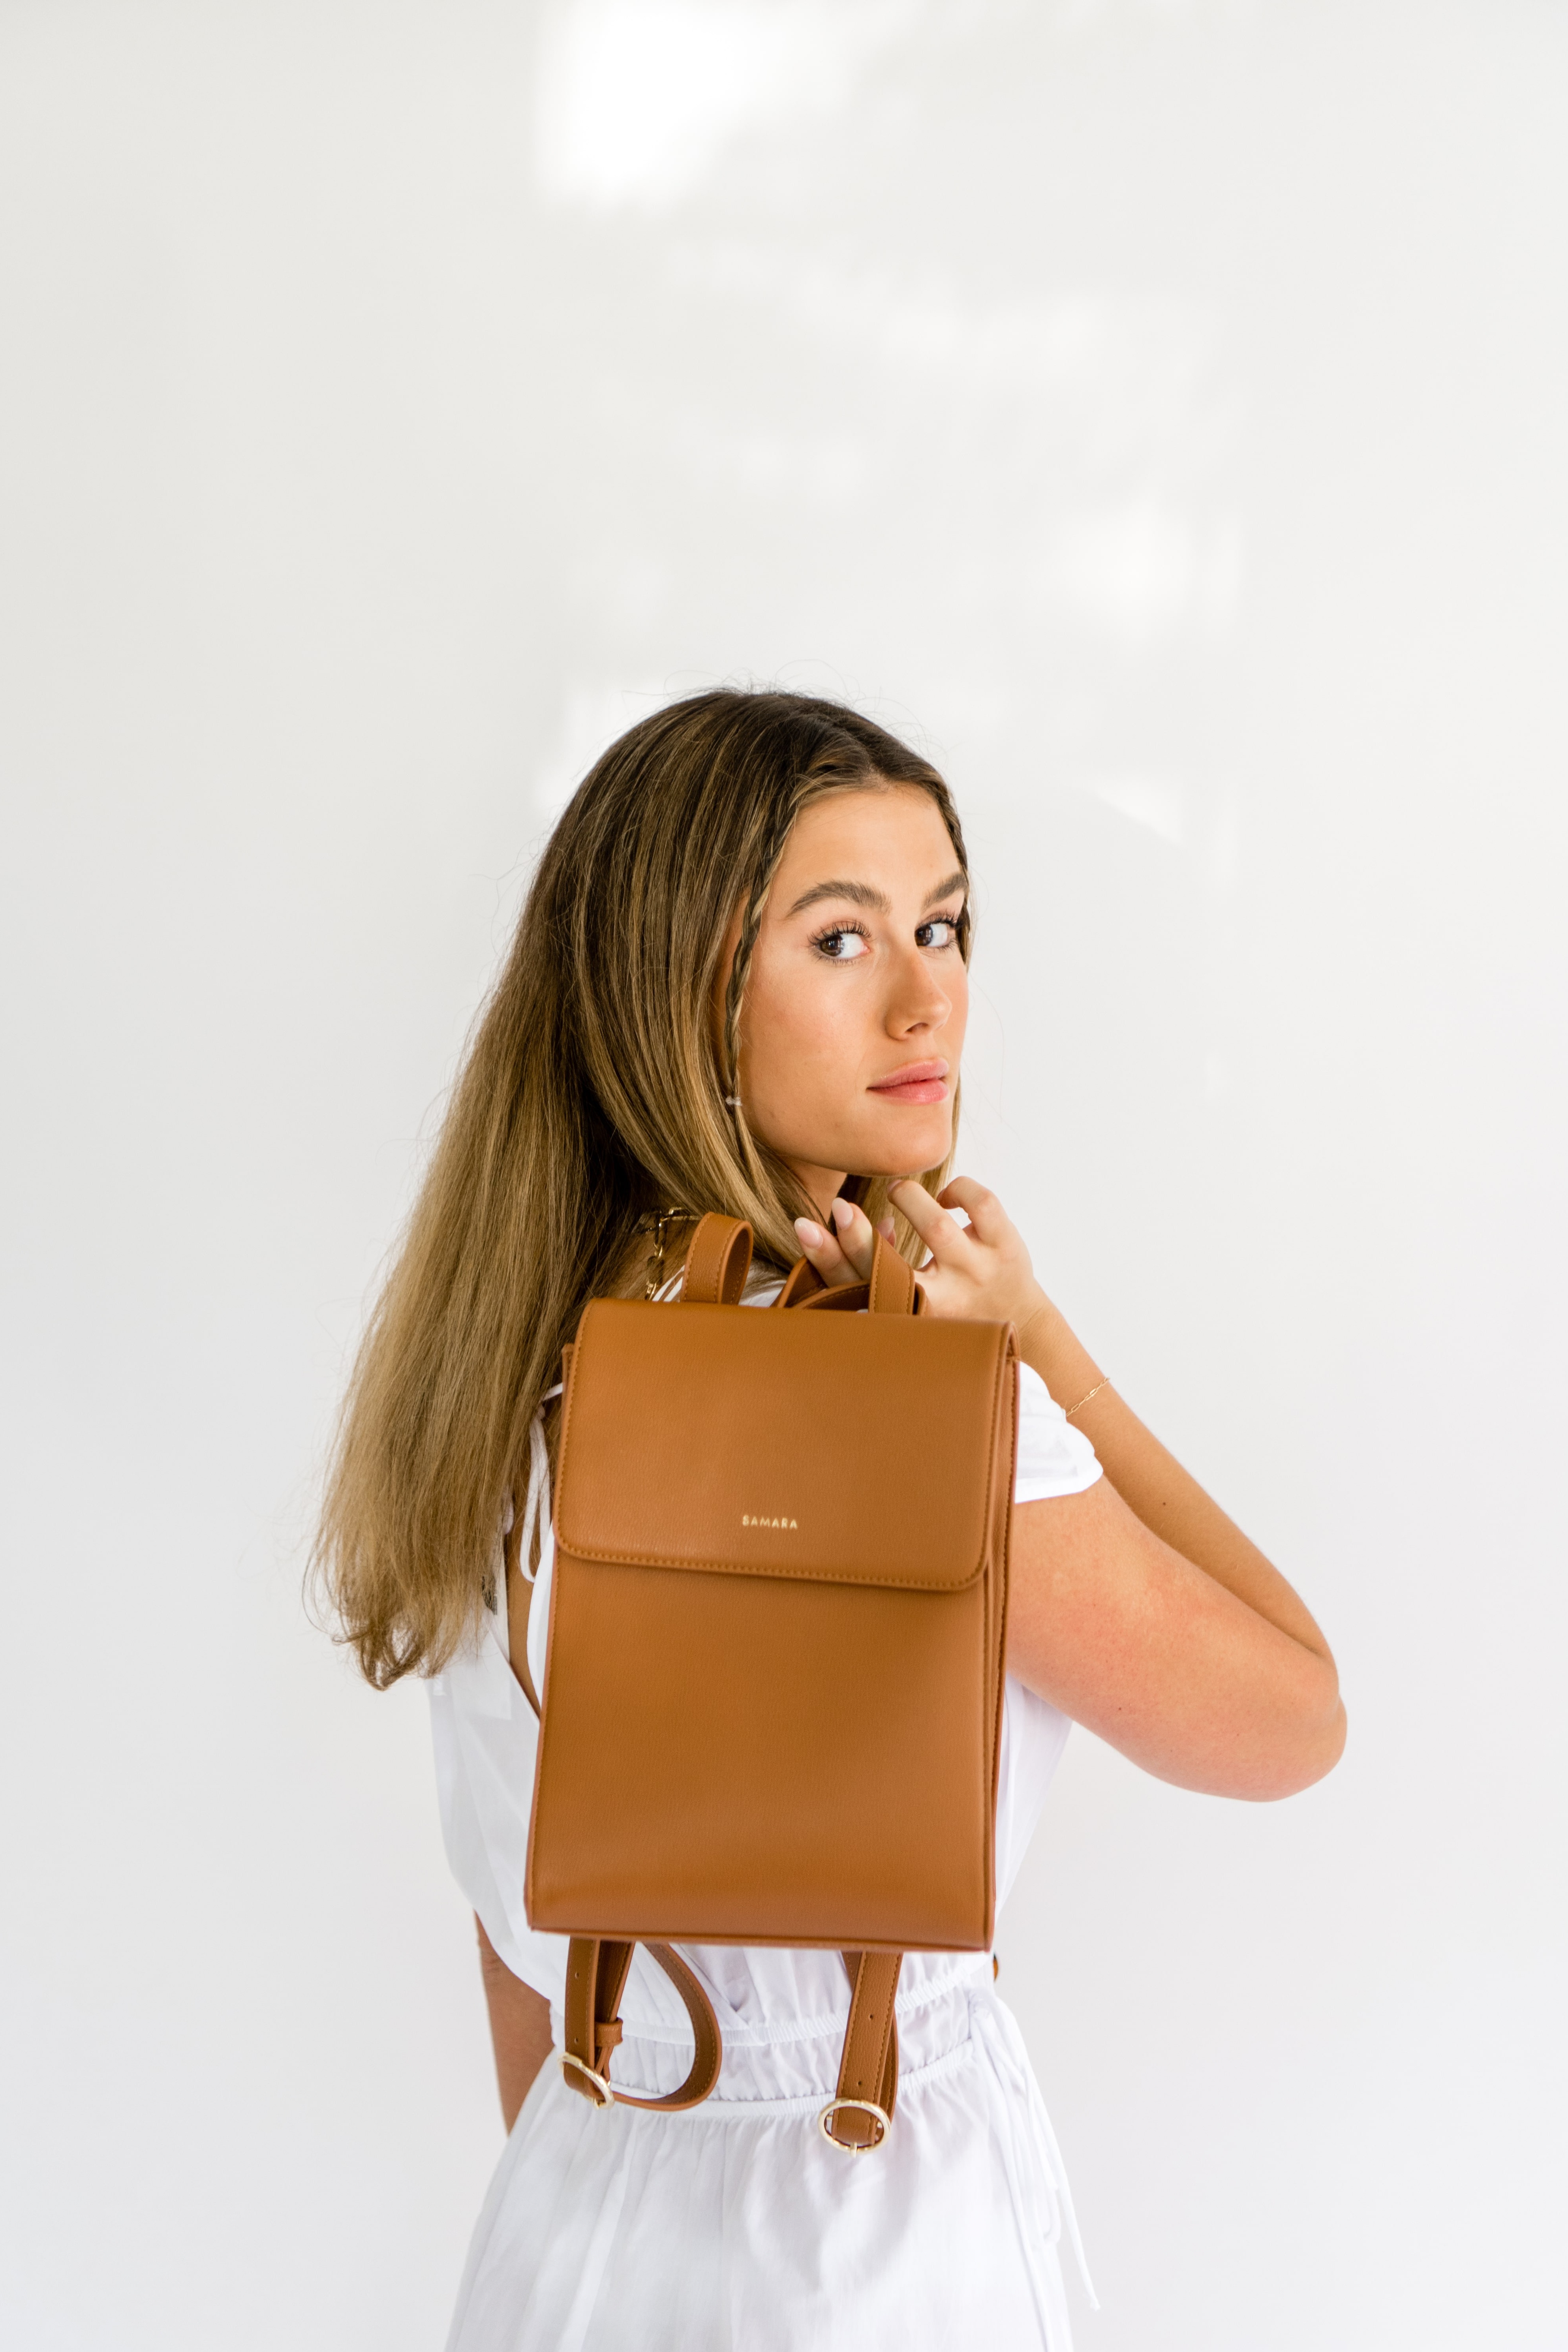 New! Samara Medium Shoulder Bag in Peony - $22 New With Tags